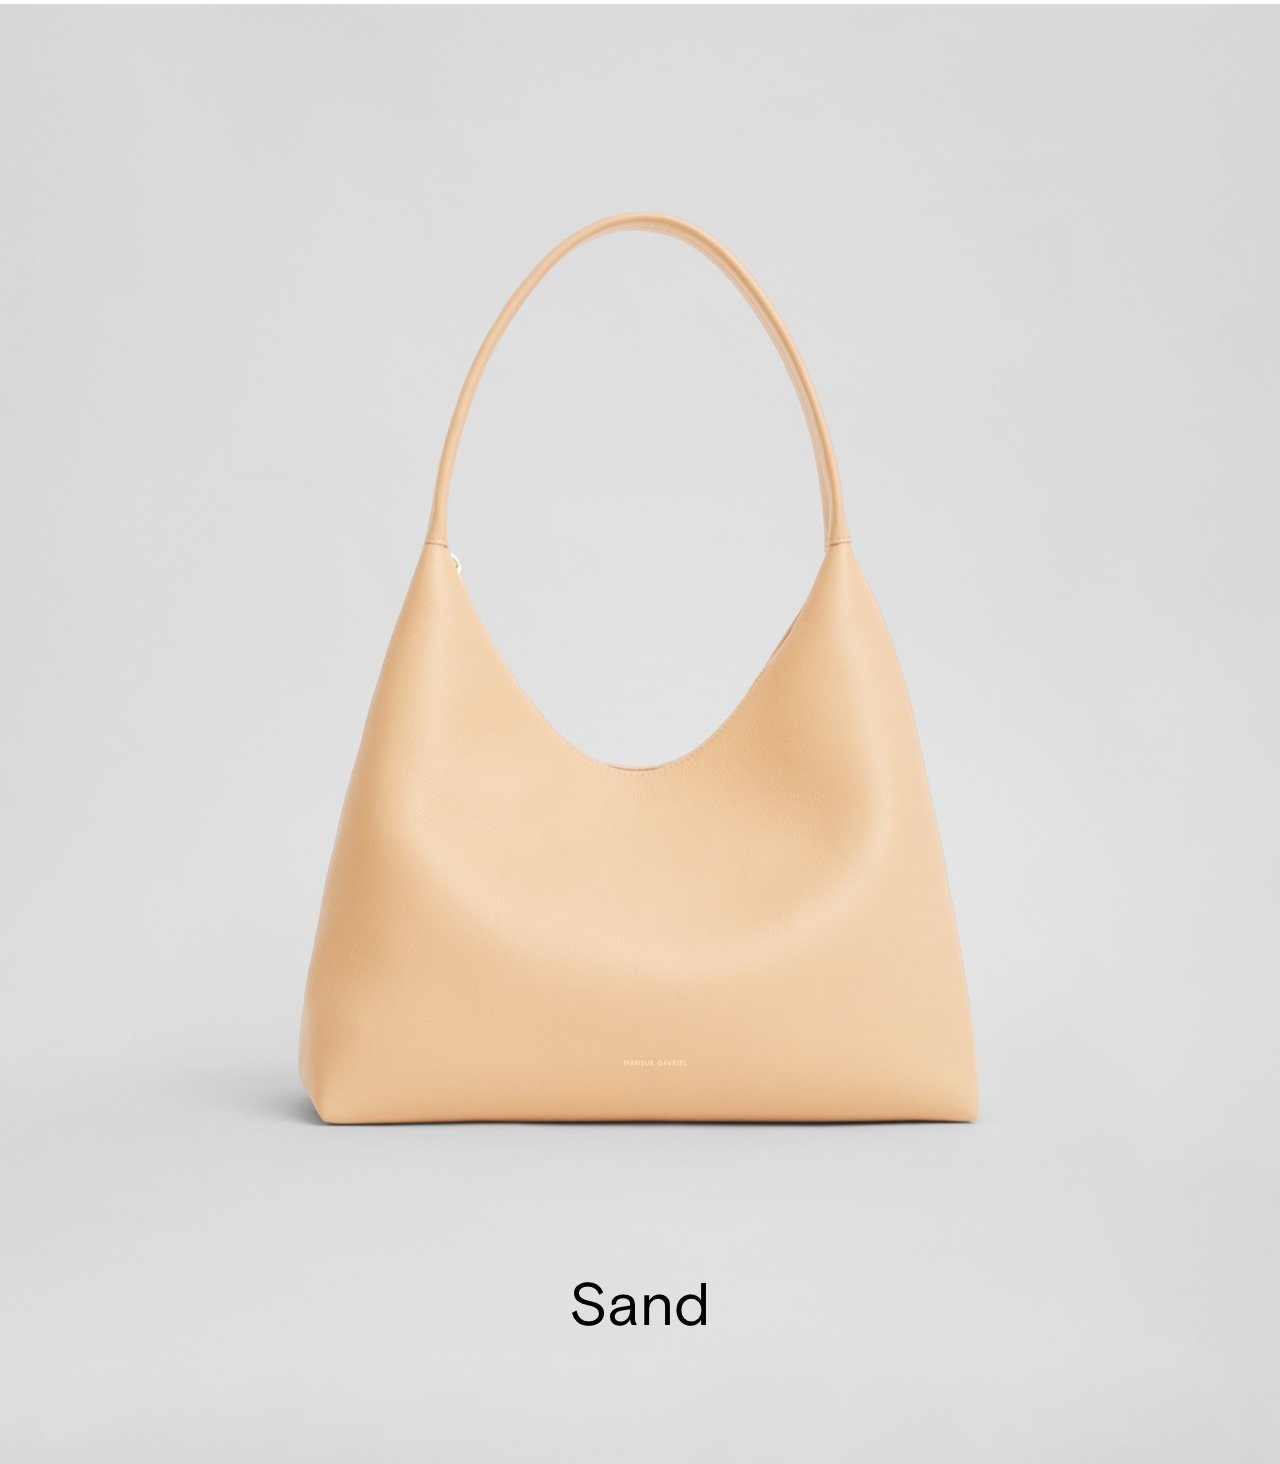 Mansur Gavriel Everyday Soft Tote - Sand